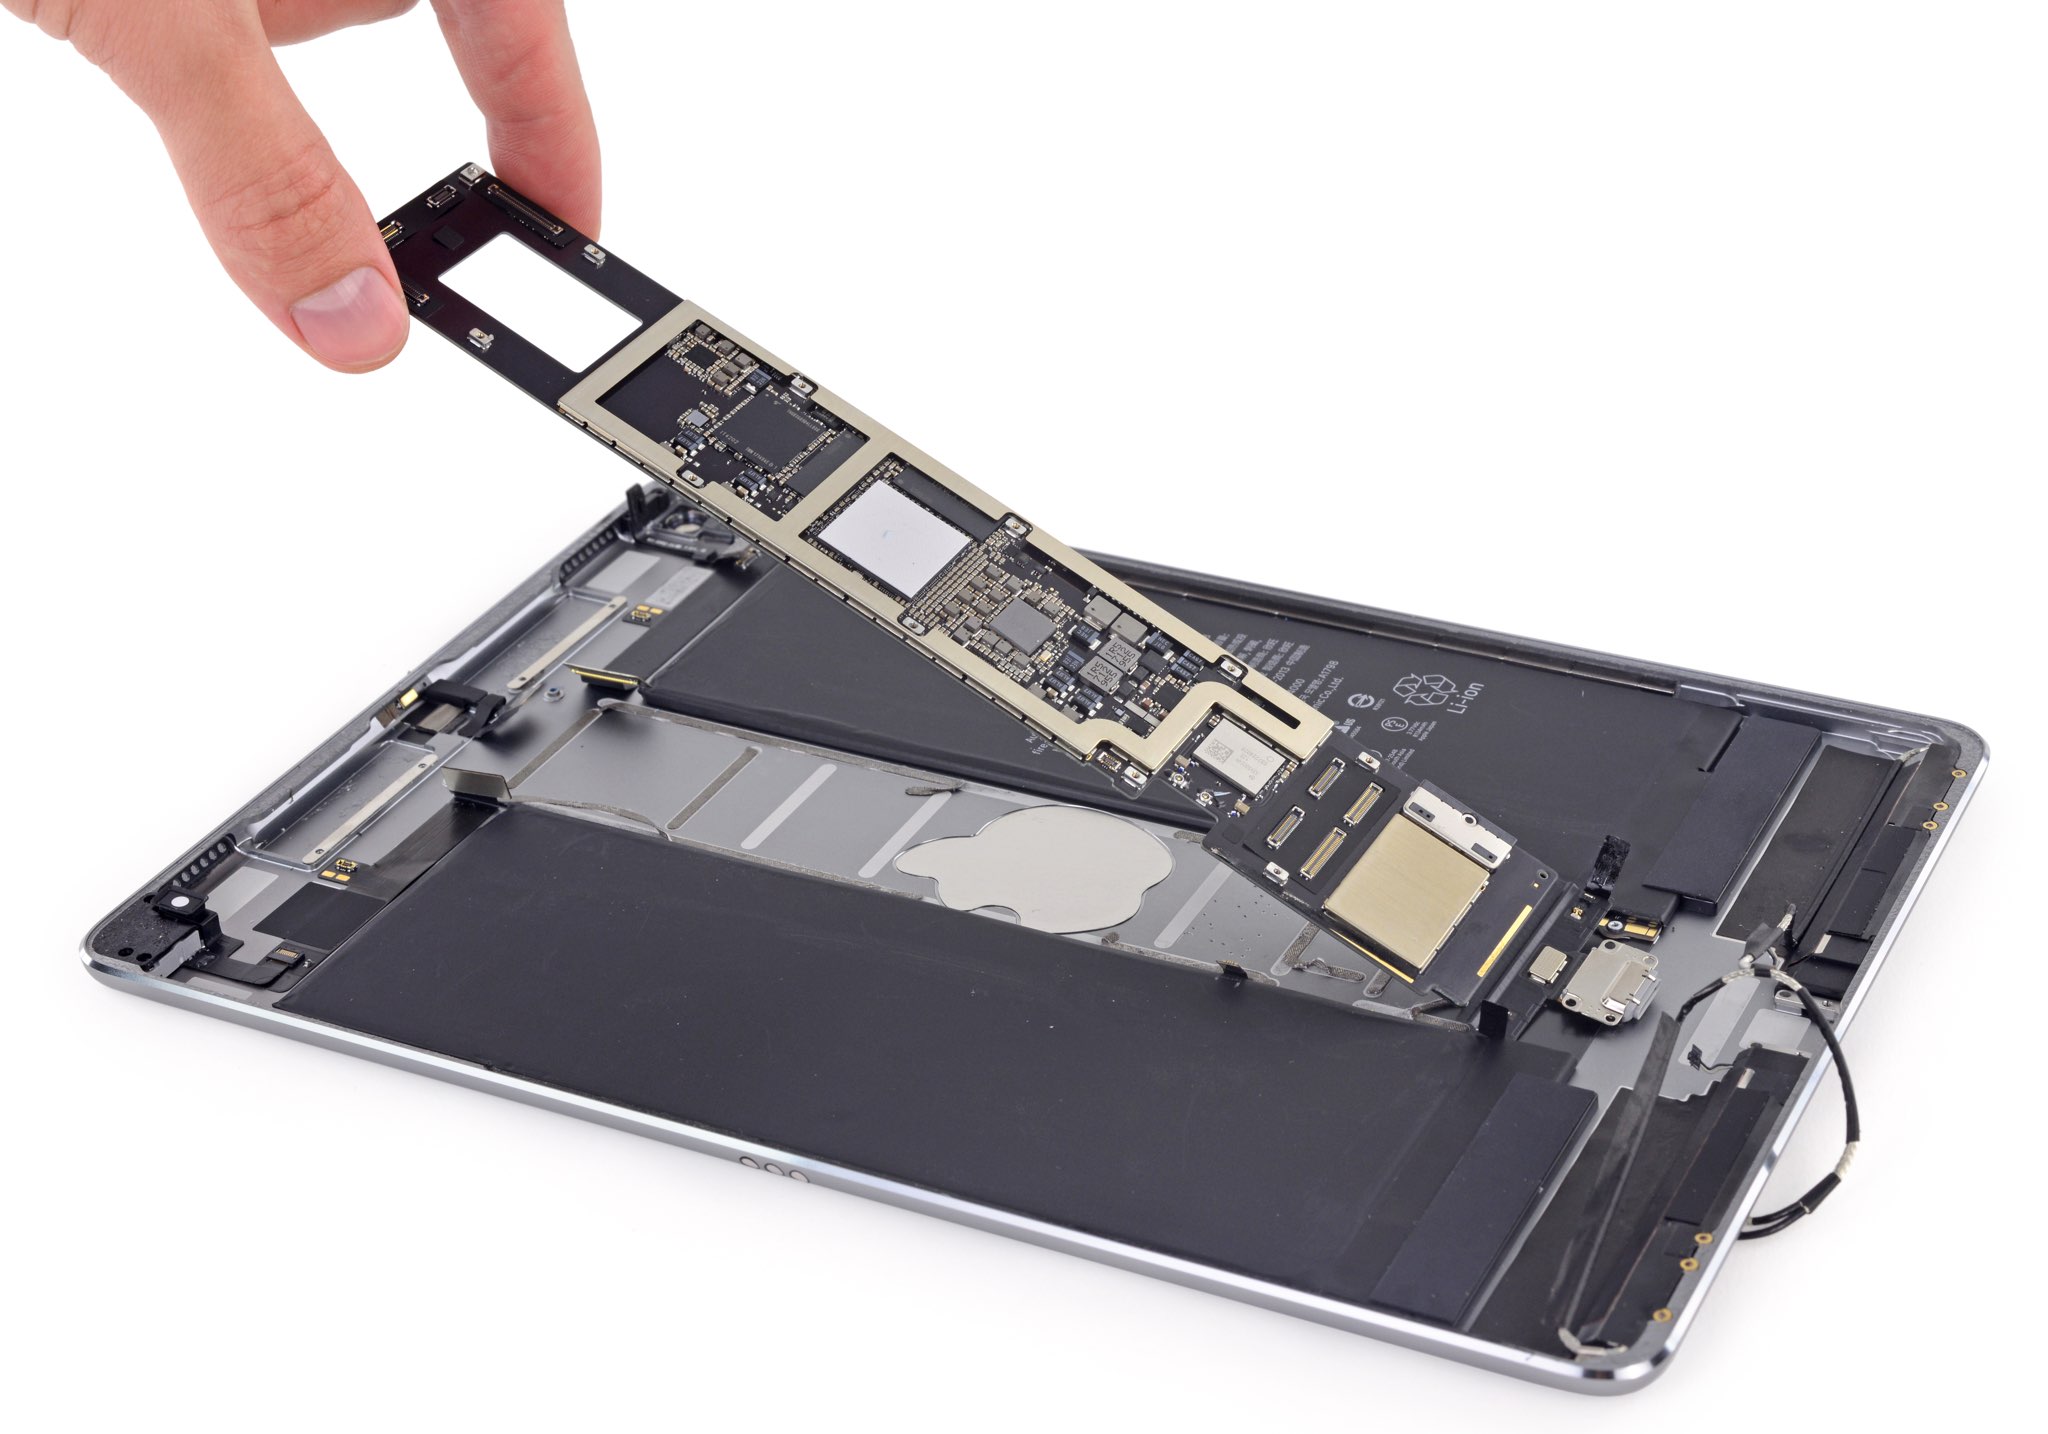 10.5-inch iPad Pro teardown image. 2018 iPad Pro models are said to run Apple's enhanced A12X Bionic chip.